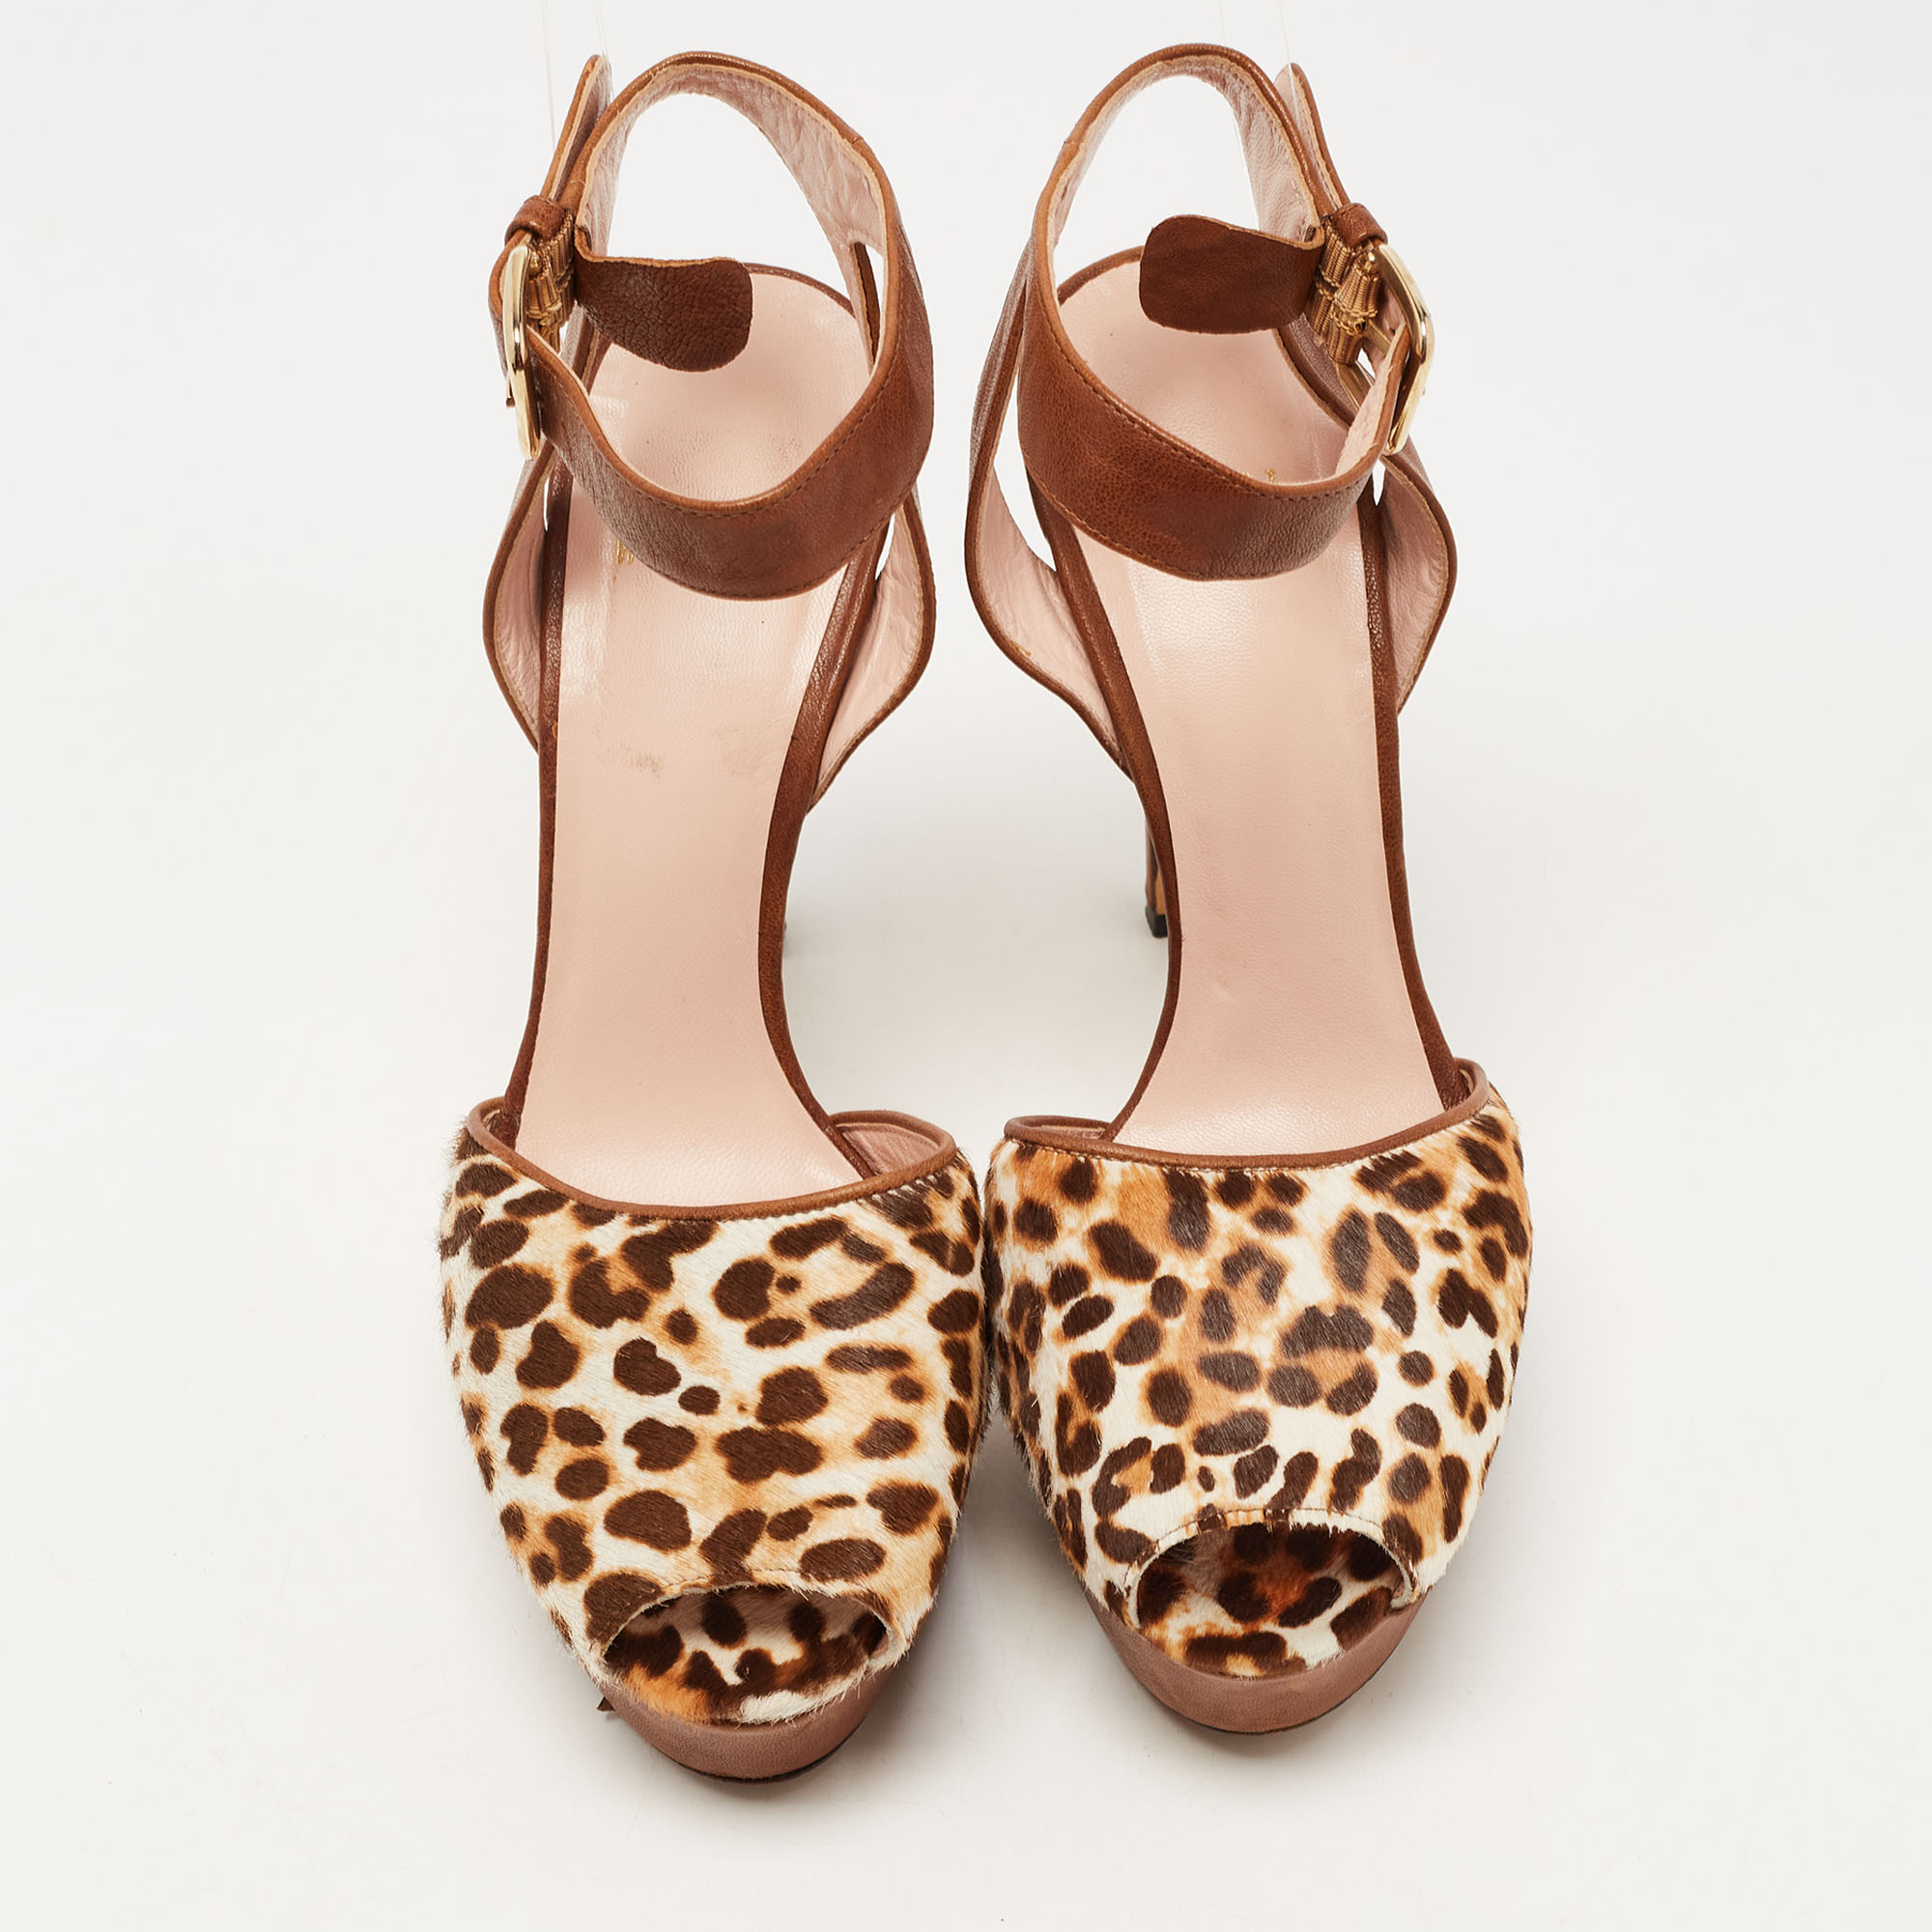 Stuart Weitzman Brown Leather And Leopard Print Pony Hair Platform Ankle Strap Sandals Size 38.5